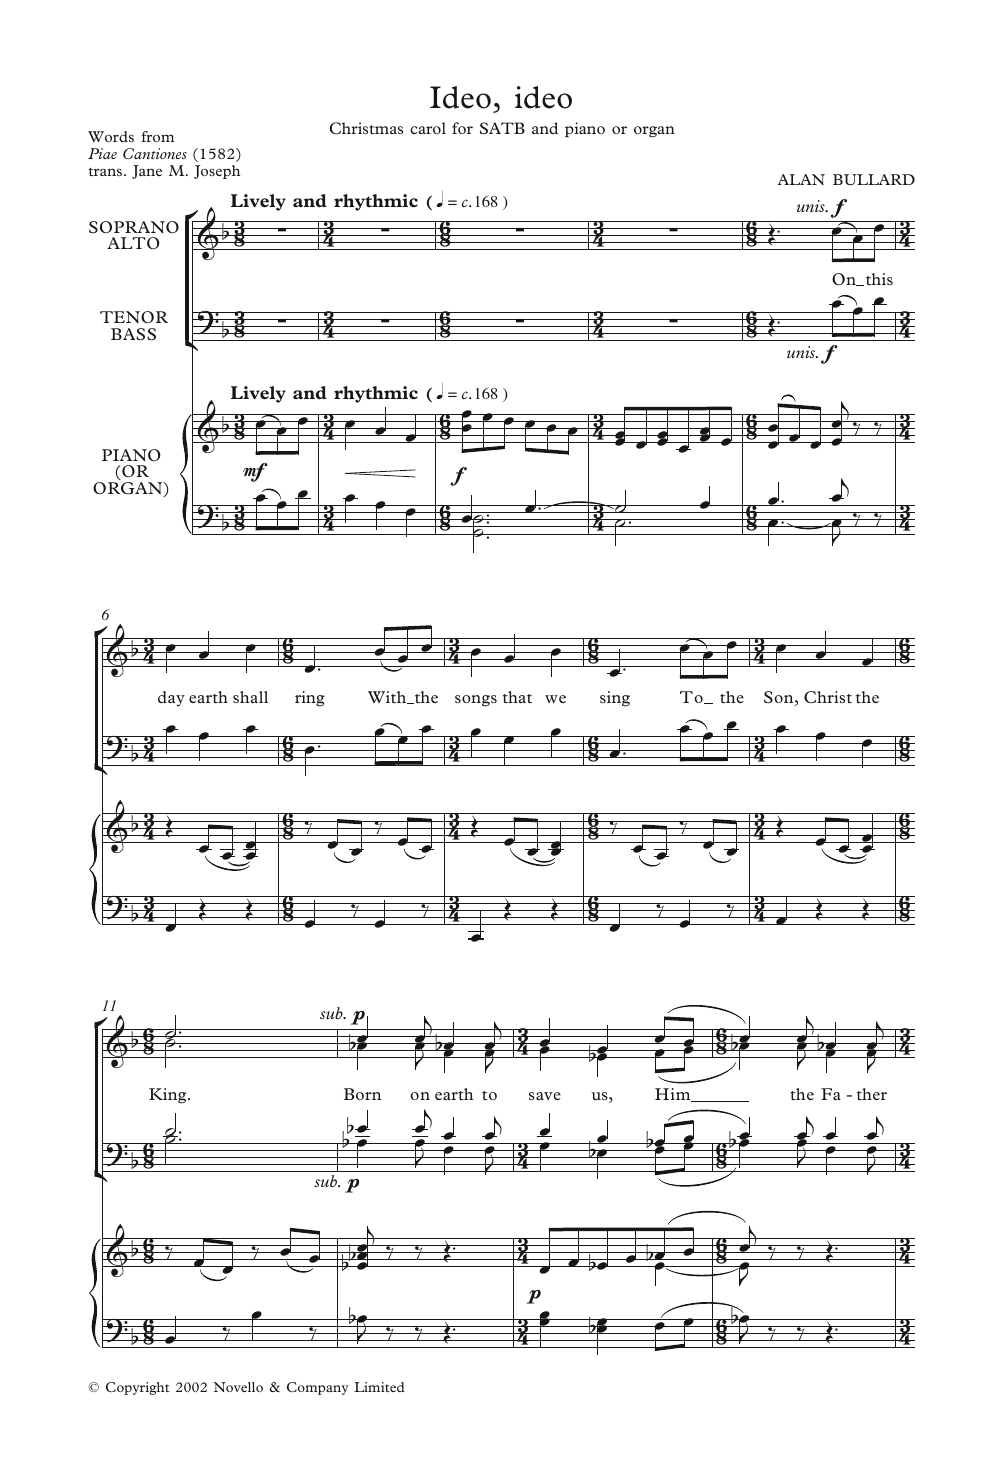 Alan Bullard Ideo, Ideo Sheet Music Notes & Chords for Choir - Download or Print PDF